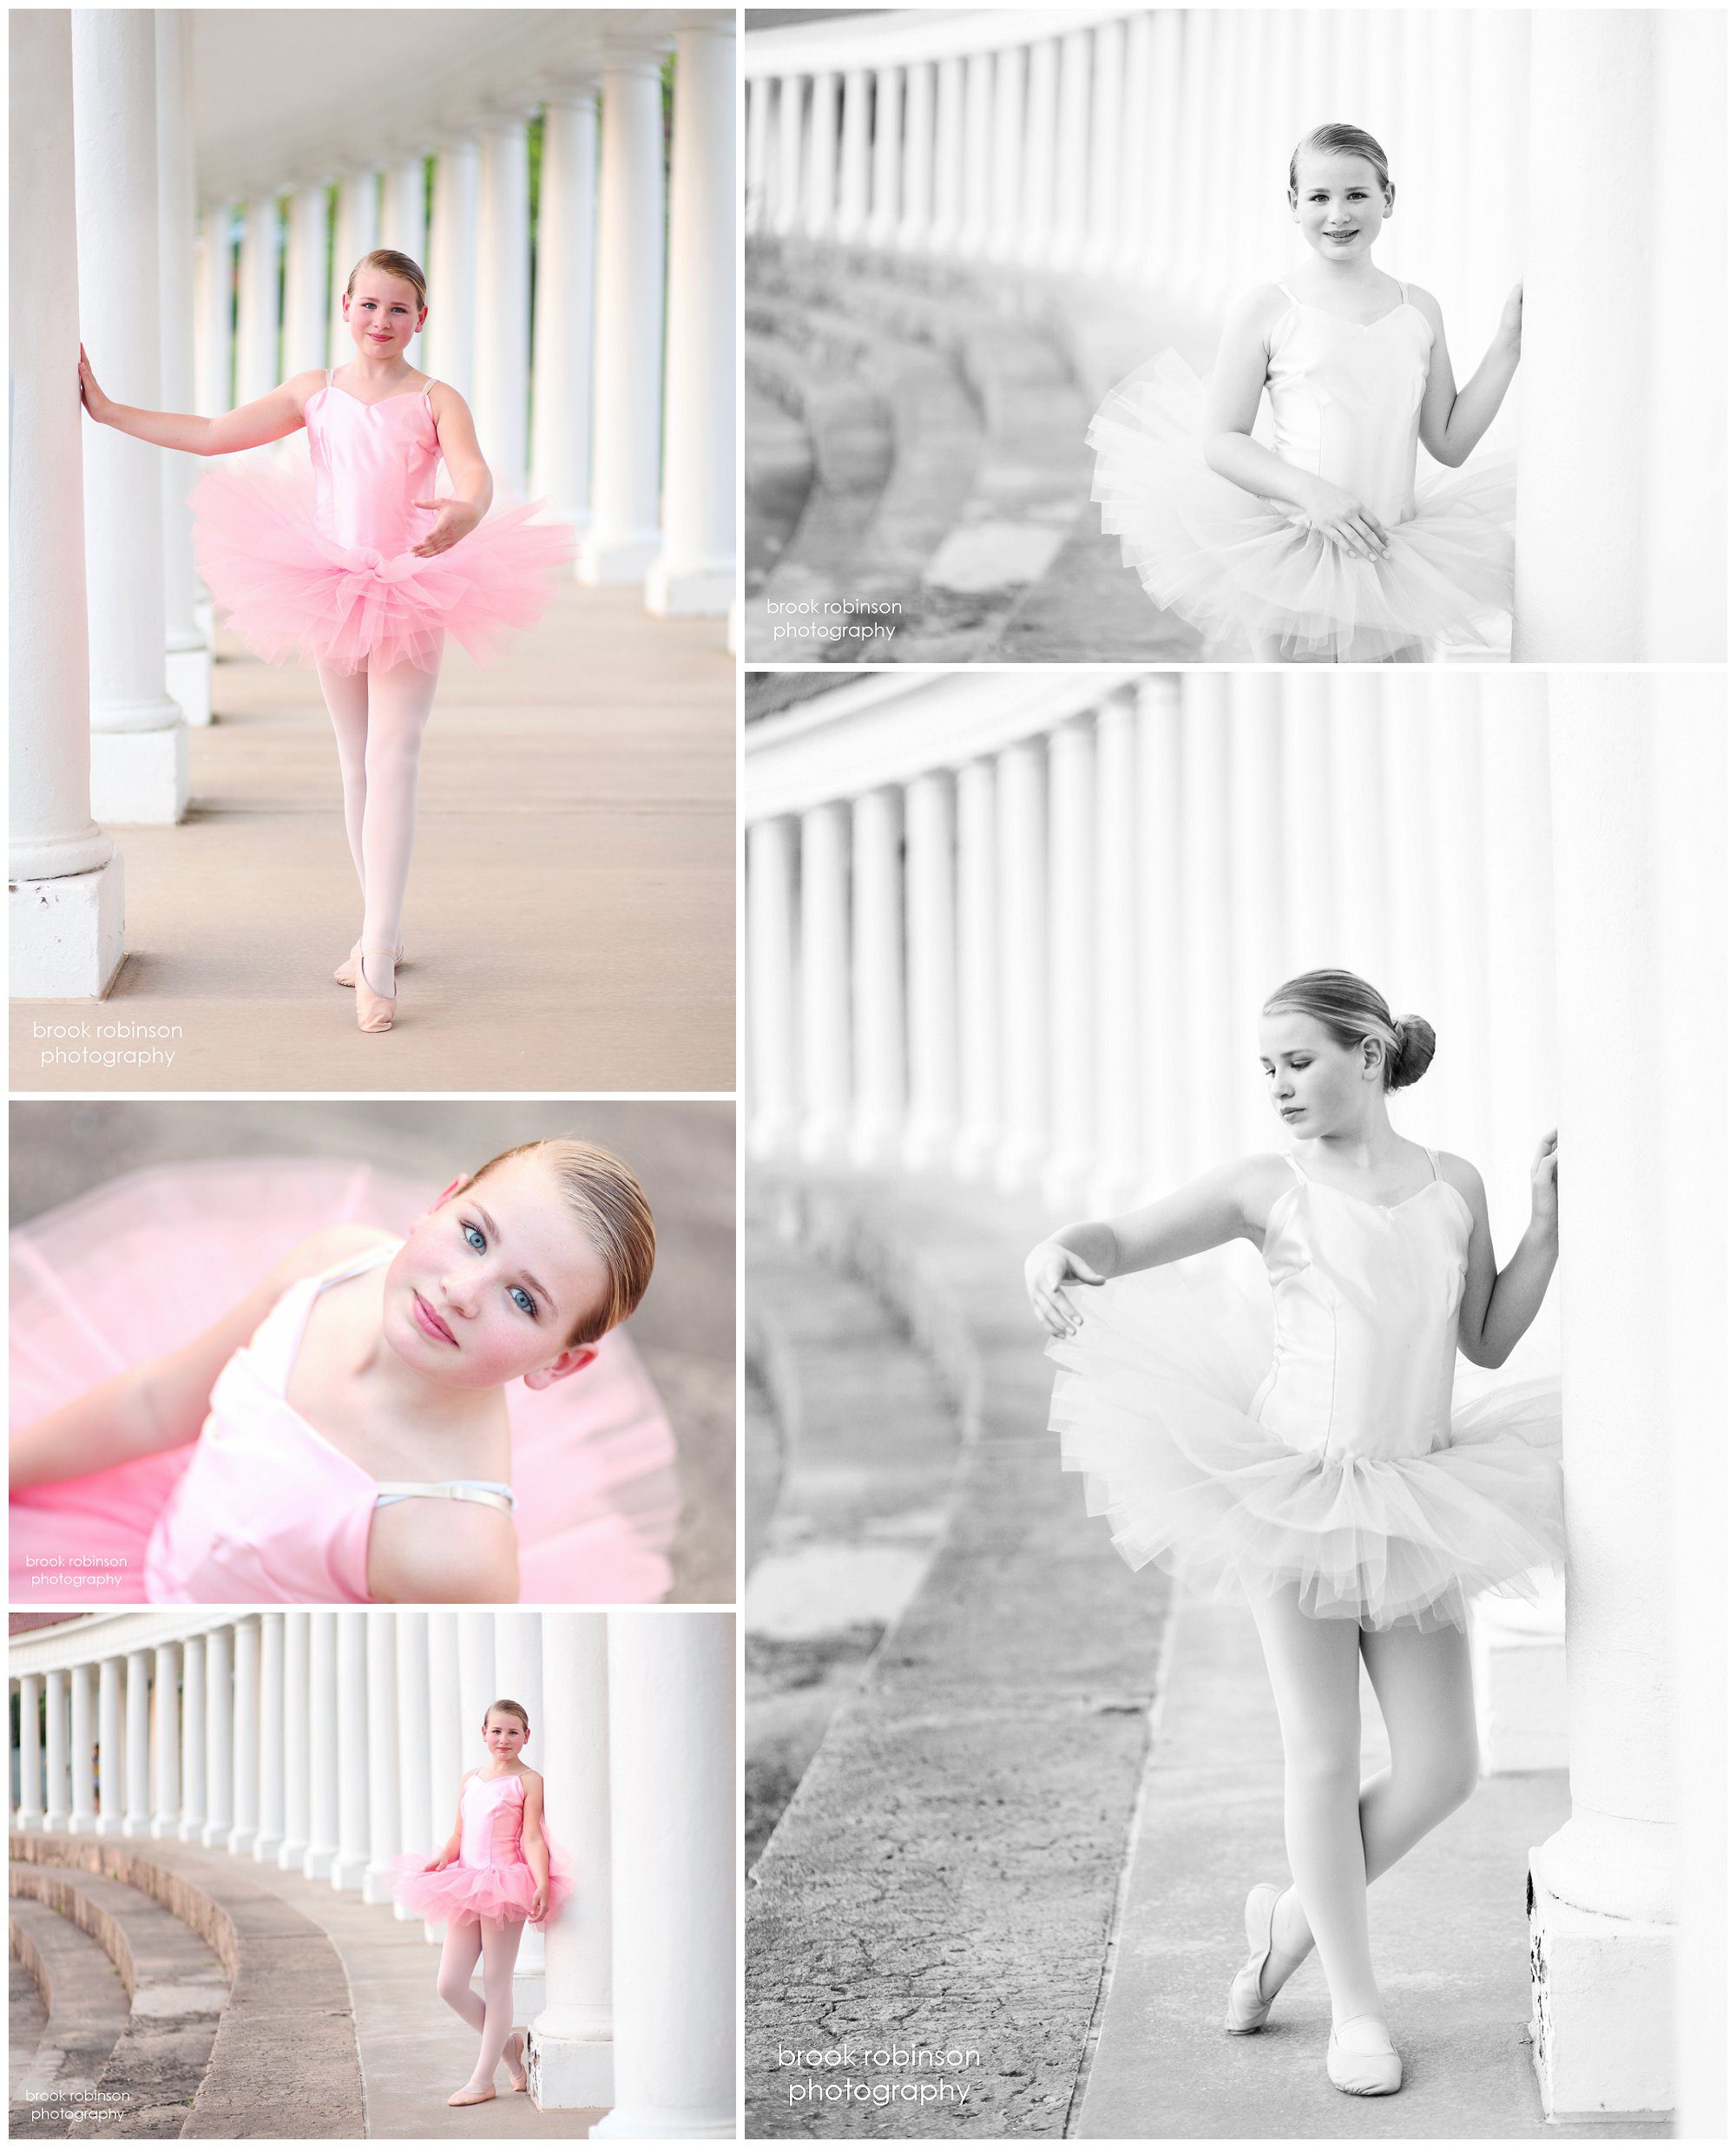 fluvanna charlottesville portrait photographer recital costume pictures downtown mall art ix park ballerina ballet dancer